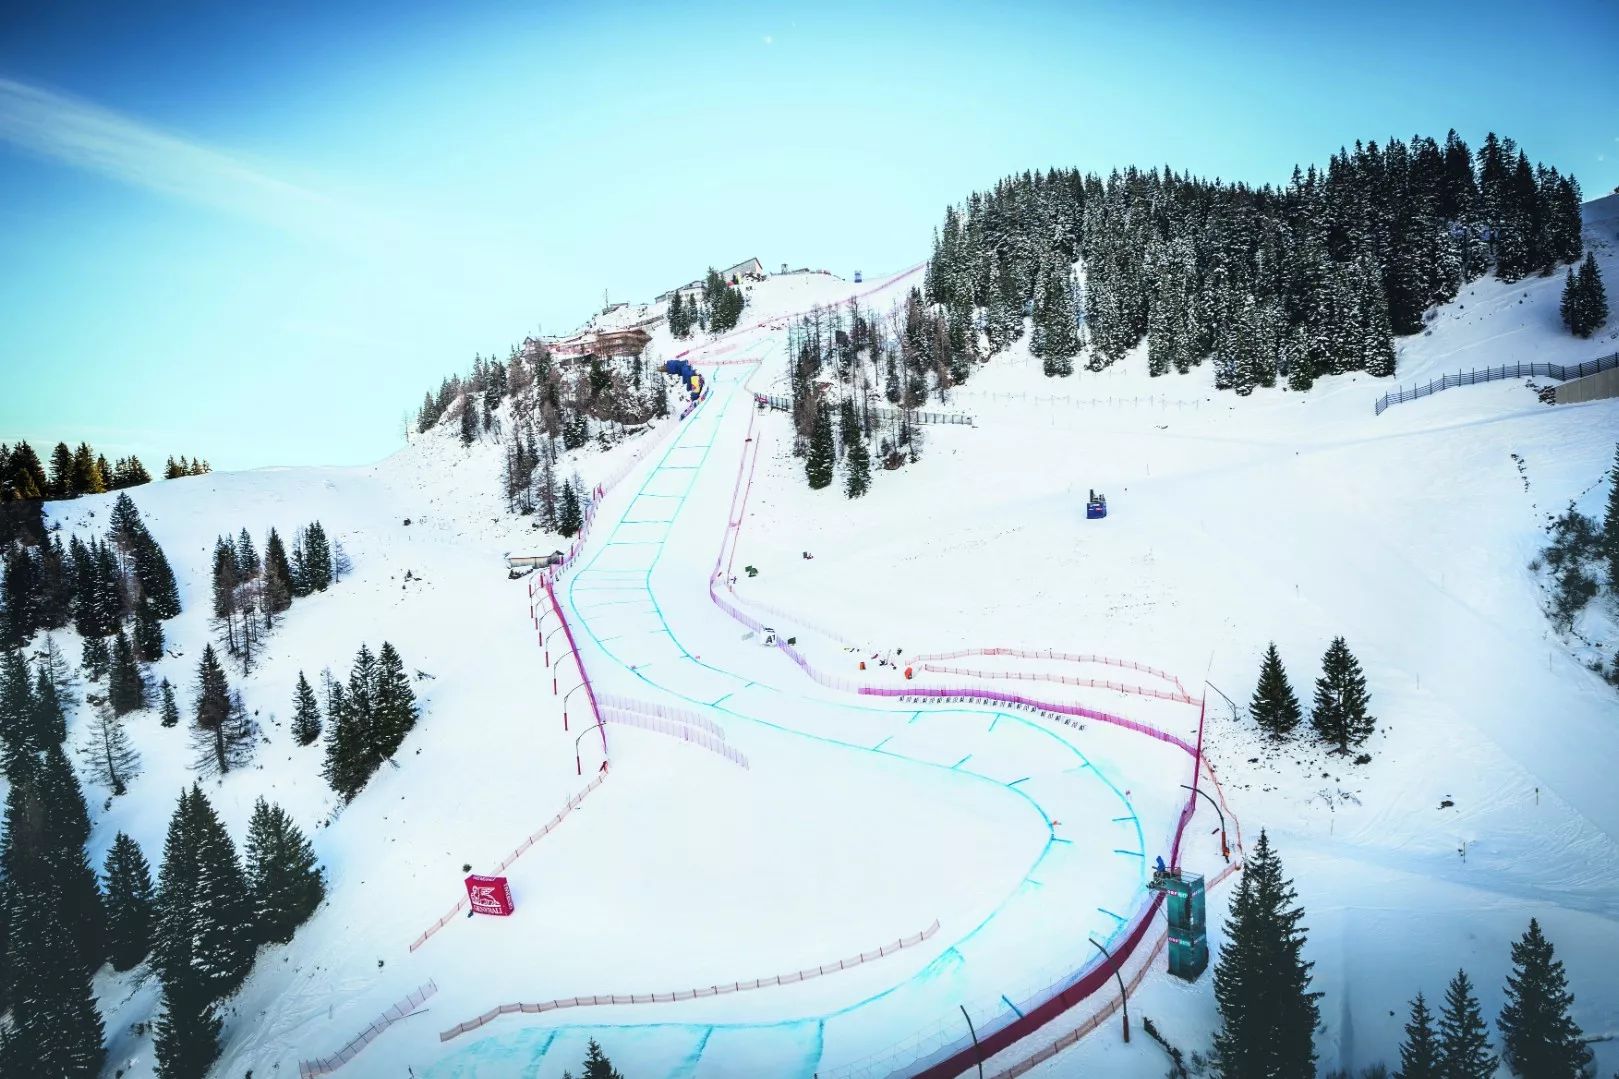 Starthaus Hahnenkammabfahrt in Austria, Europe | Snowboarding,Skiing - Rated 4.2